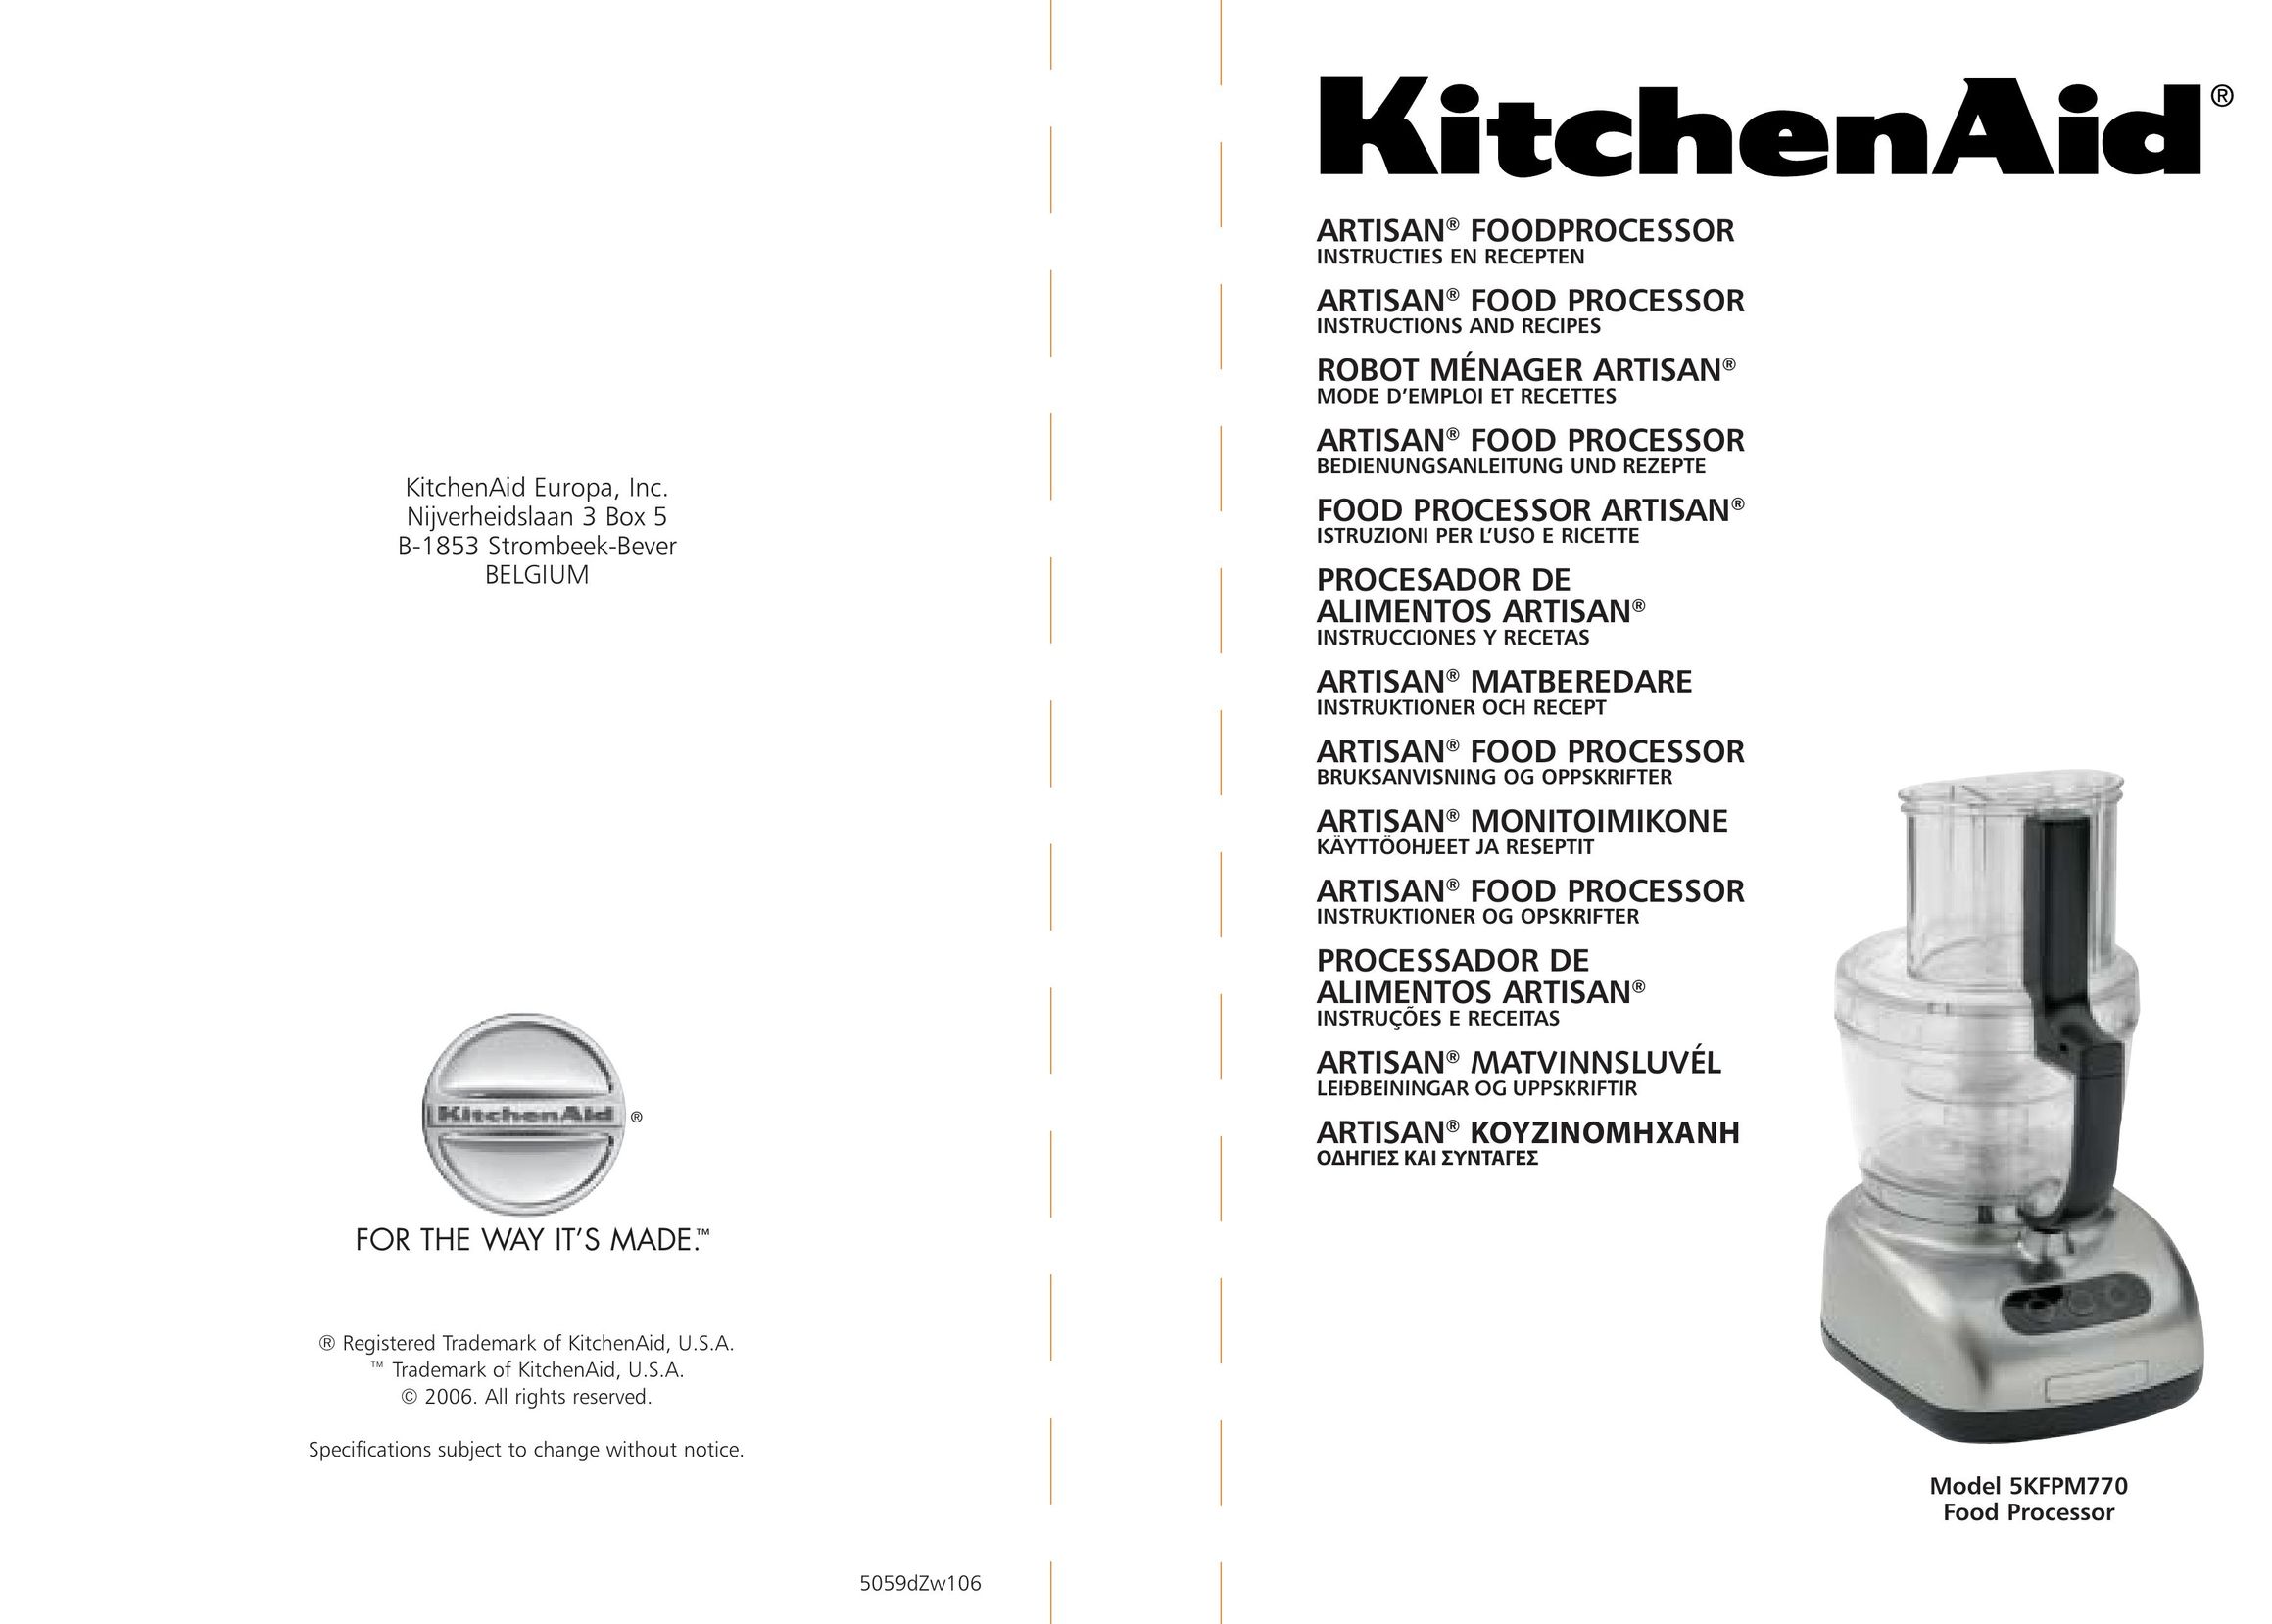 KitchenAid 5KFPM770 Food Processor User Manual